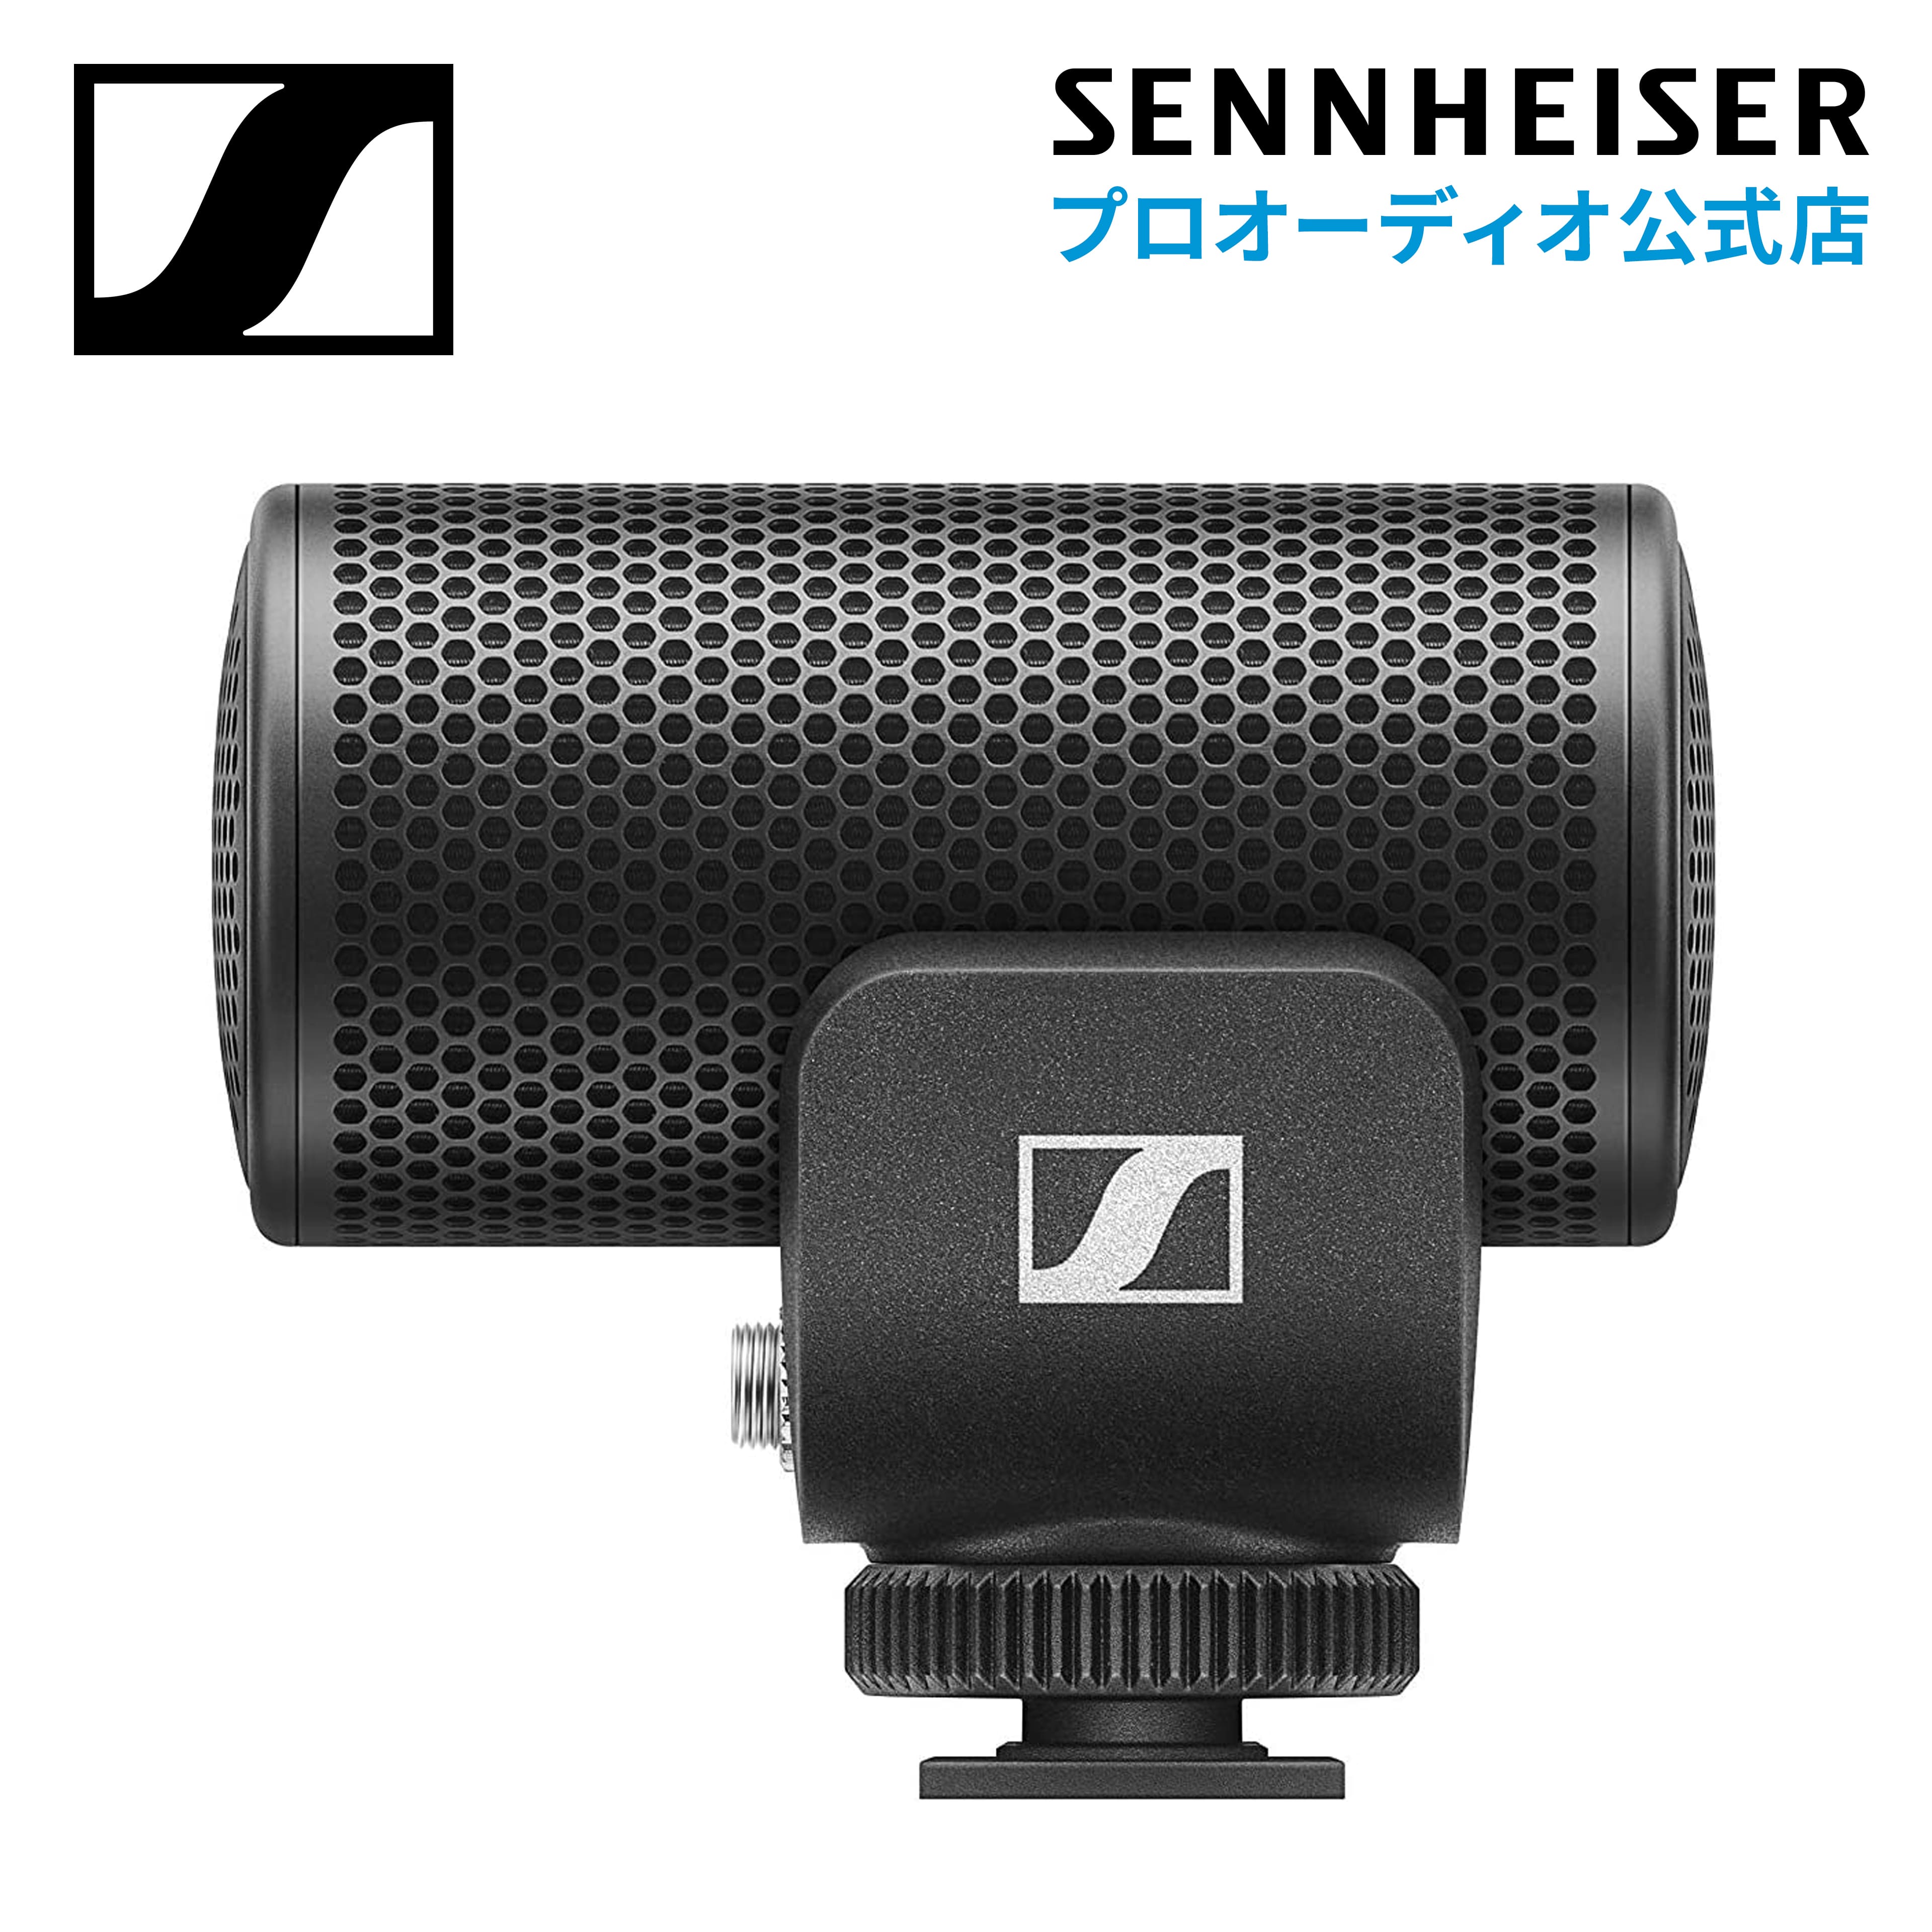 Sennheiser ゼンハイザー MKE 200 オンカメラマイク 【国内正規品】 508897 メーカー保証2年 送料無料 指向性カメラマイク Youtube クリエーター